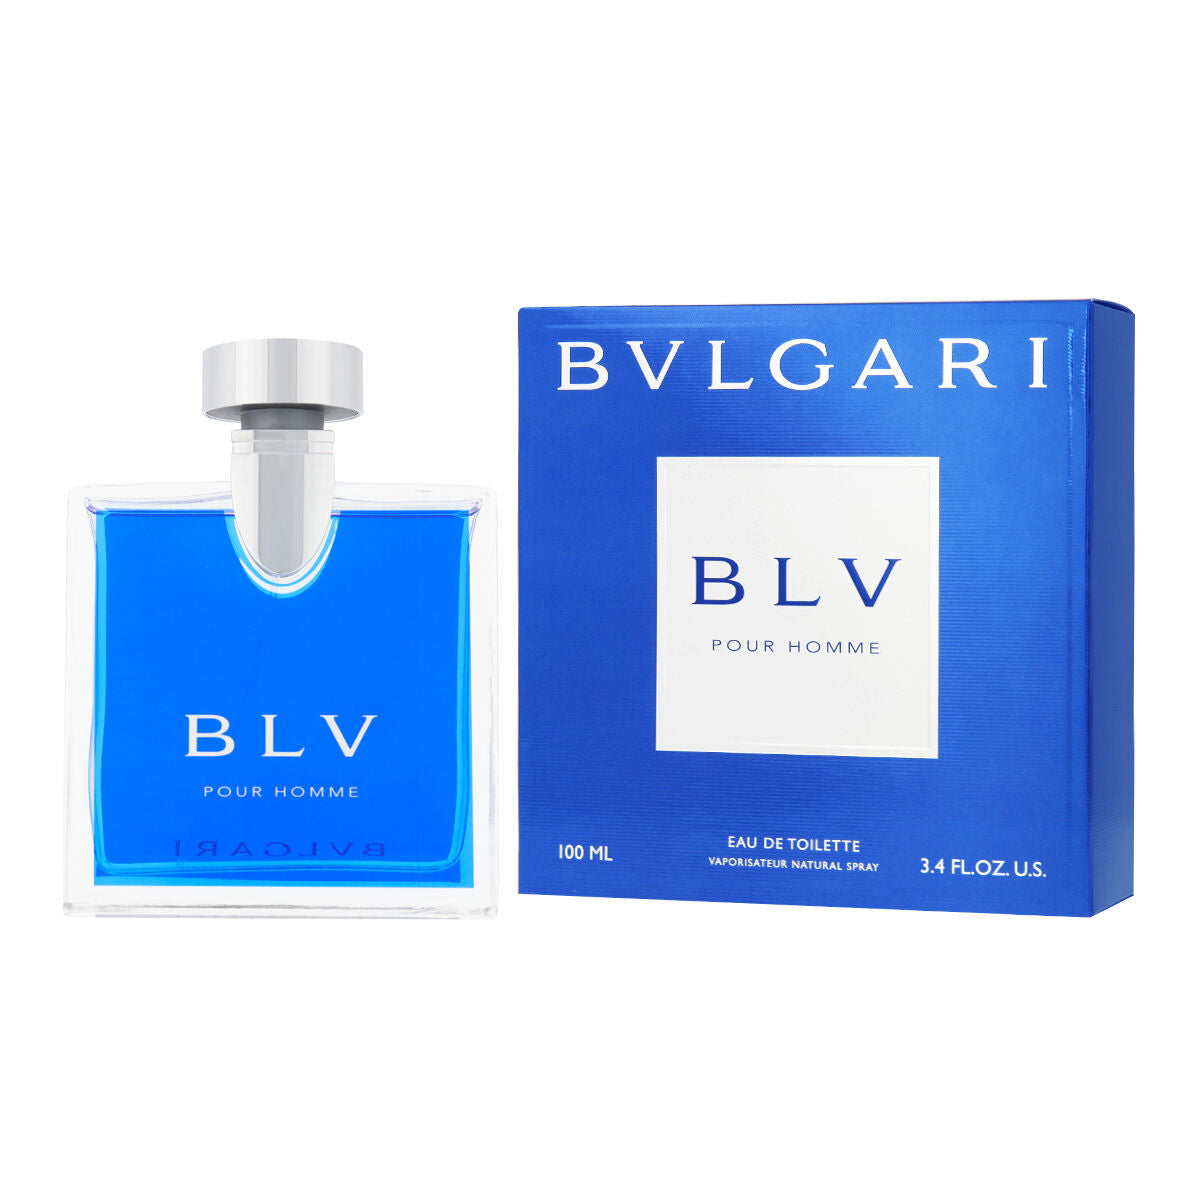 BVLGARI BLV by Bvlgari Eau De Toilette Spray 3.4 oz for Men